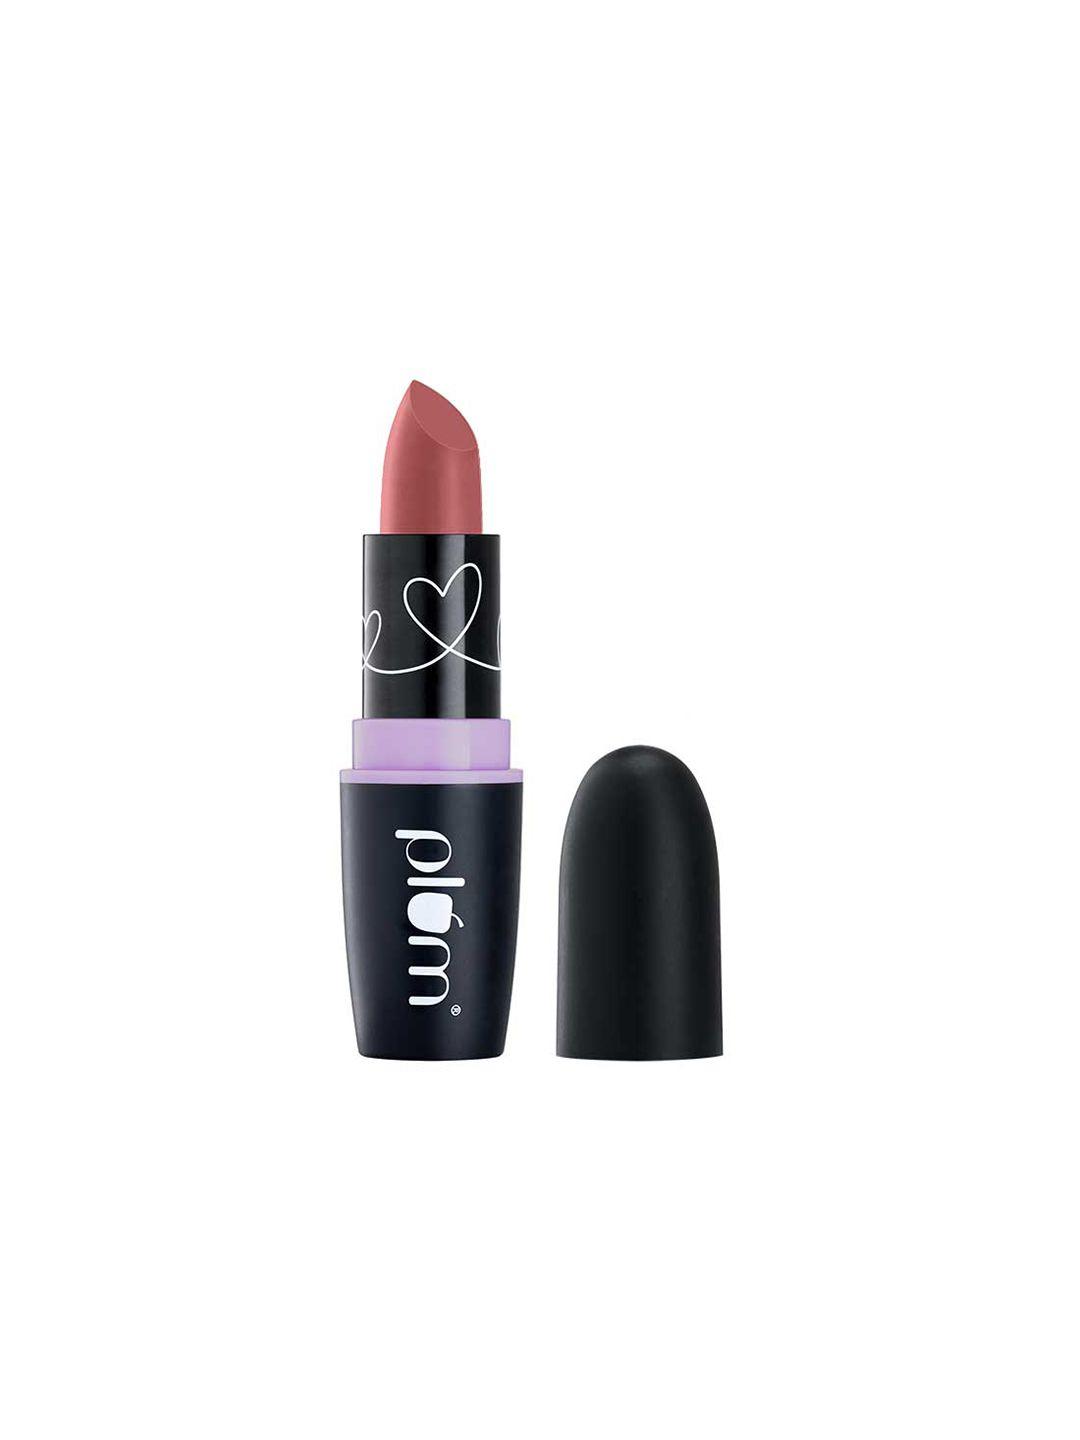 plum highly pigmented lightweight & non-drying matterrific lipstick - jollywood 132